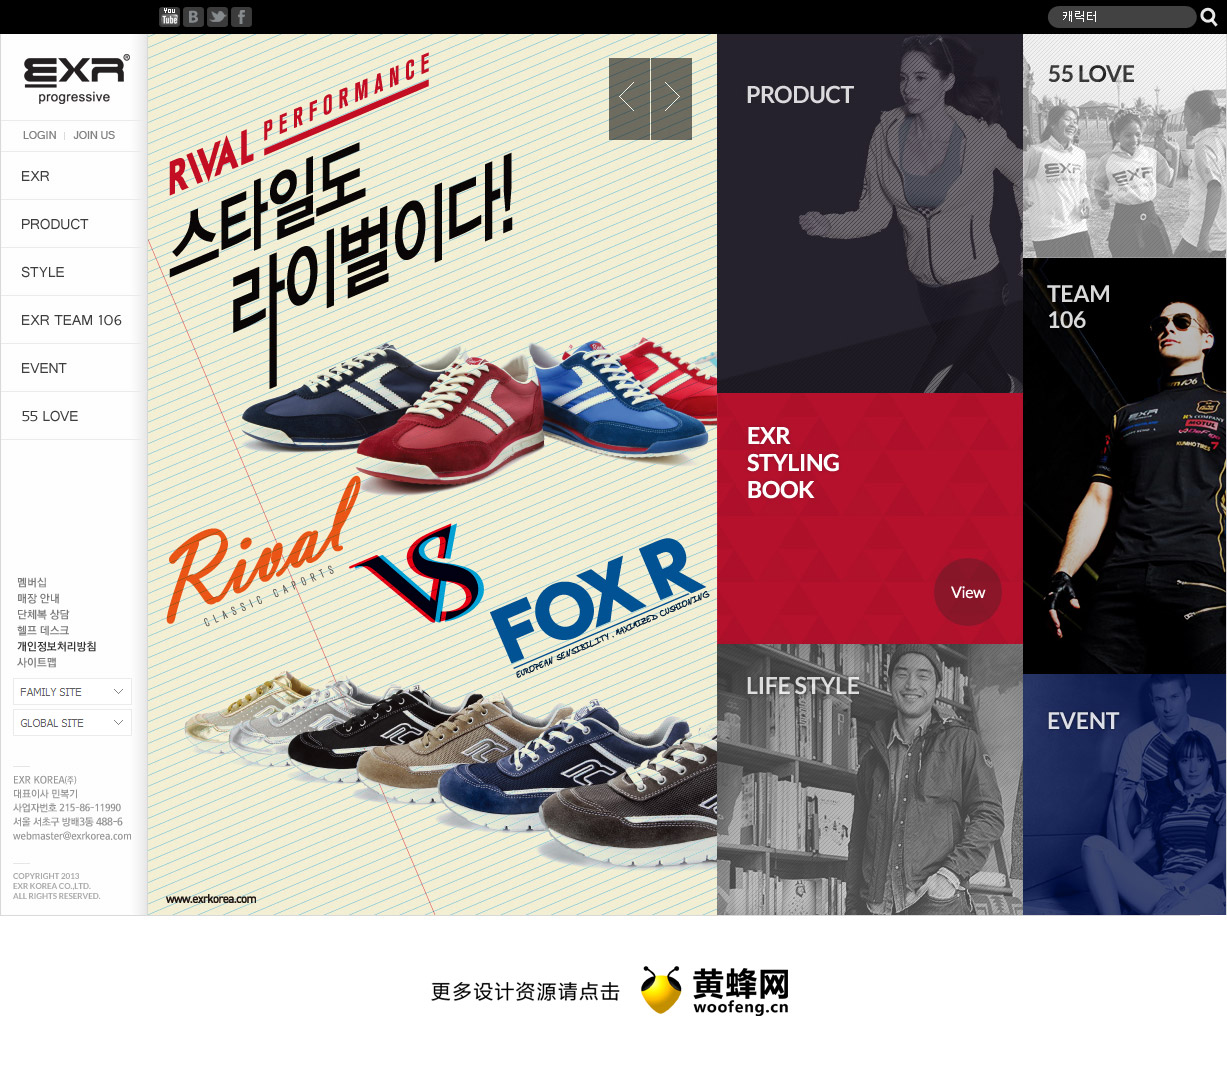 EXR韩国运动品牌网站，来源自黄蜂网https://woofeng.cn/web/